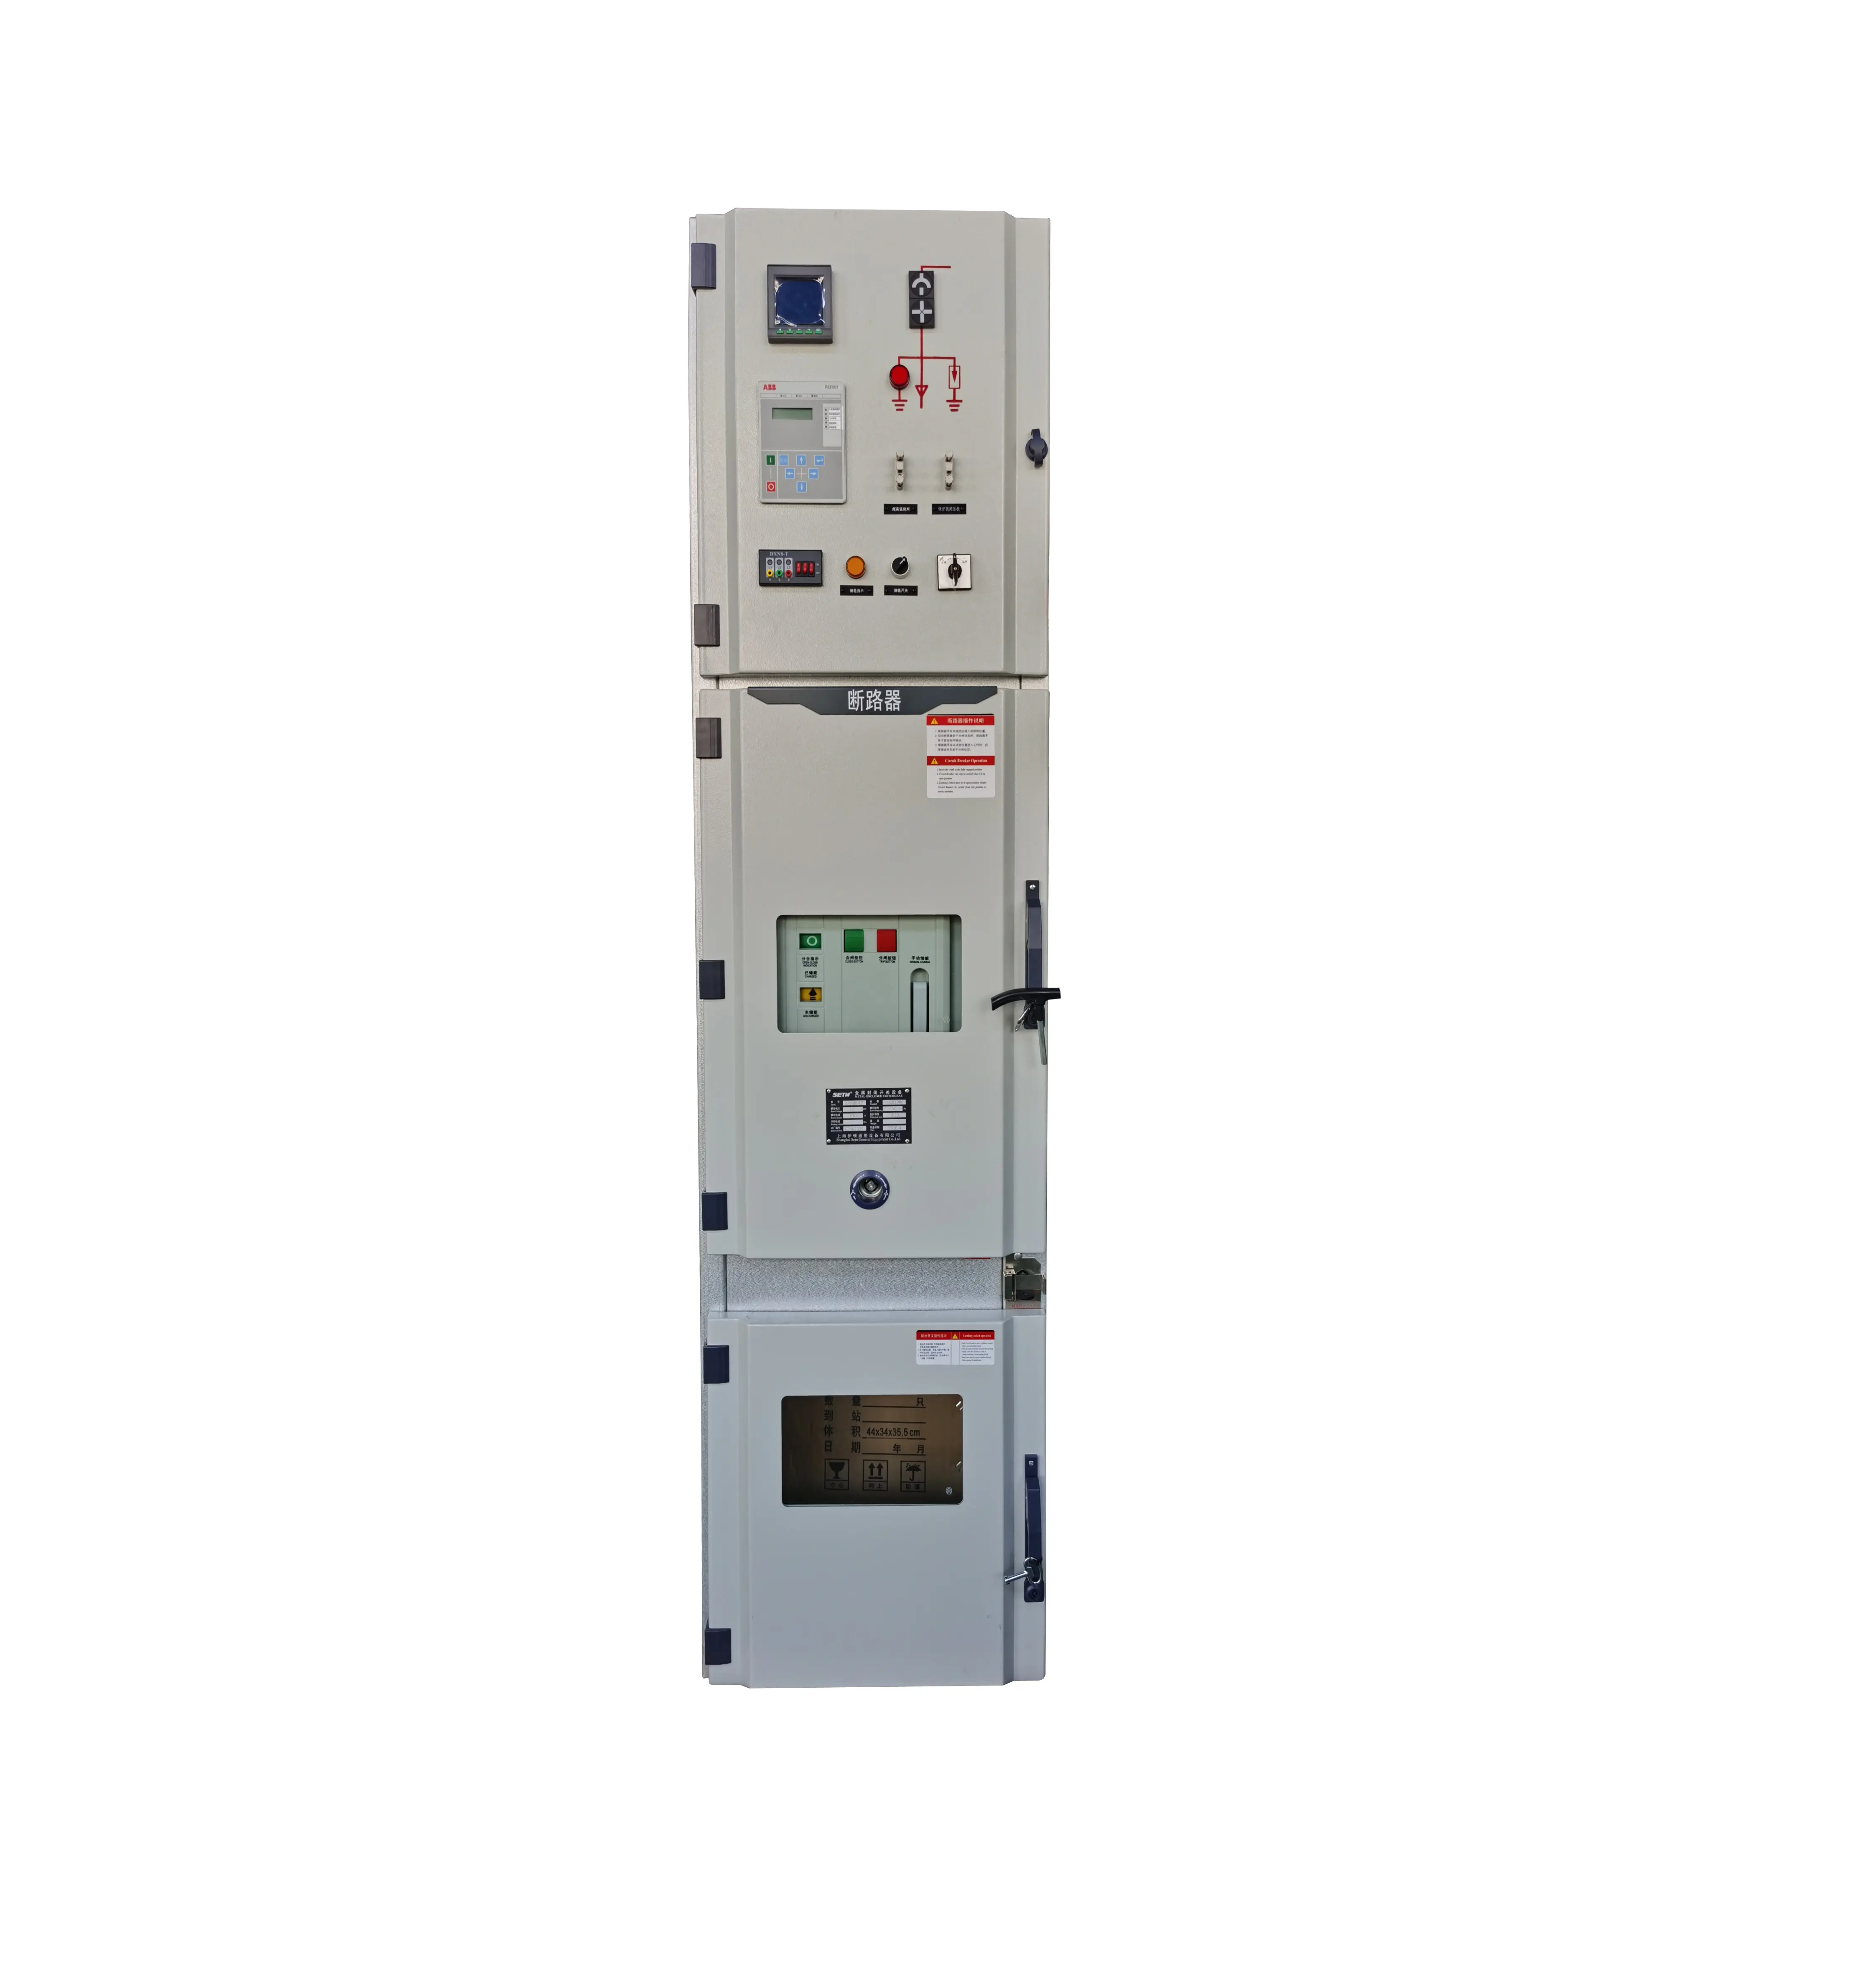 KYN28-12 Seriesไฟฟ้าแผงควบคุมบอร์ด/Power Distributionตู้และKyn28สวิตช์แรงดันไฟฟ้าSwitchgear